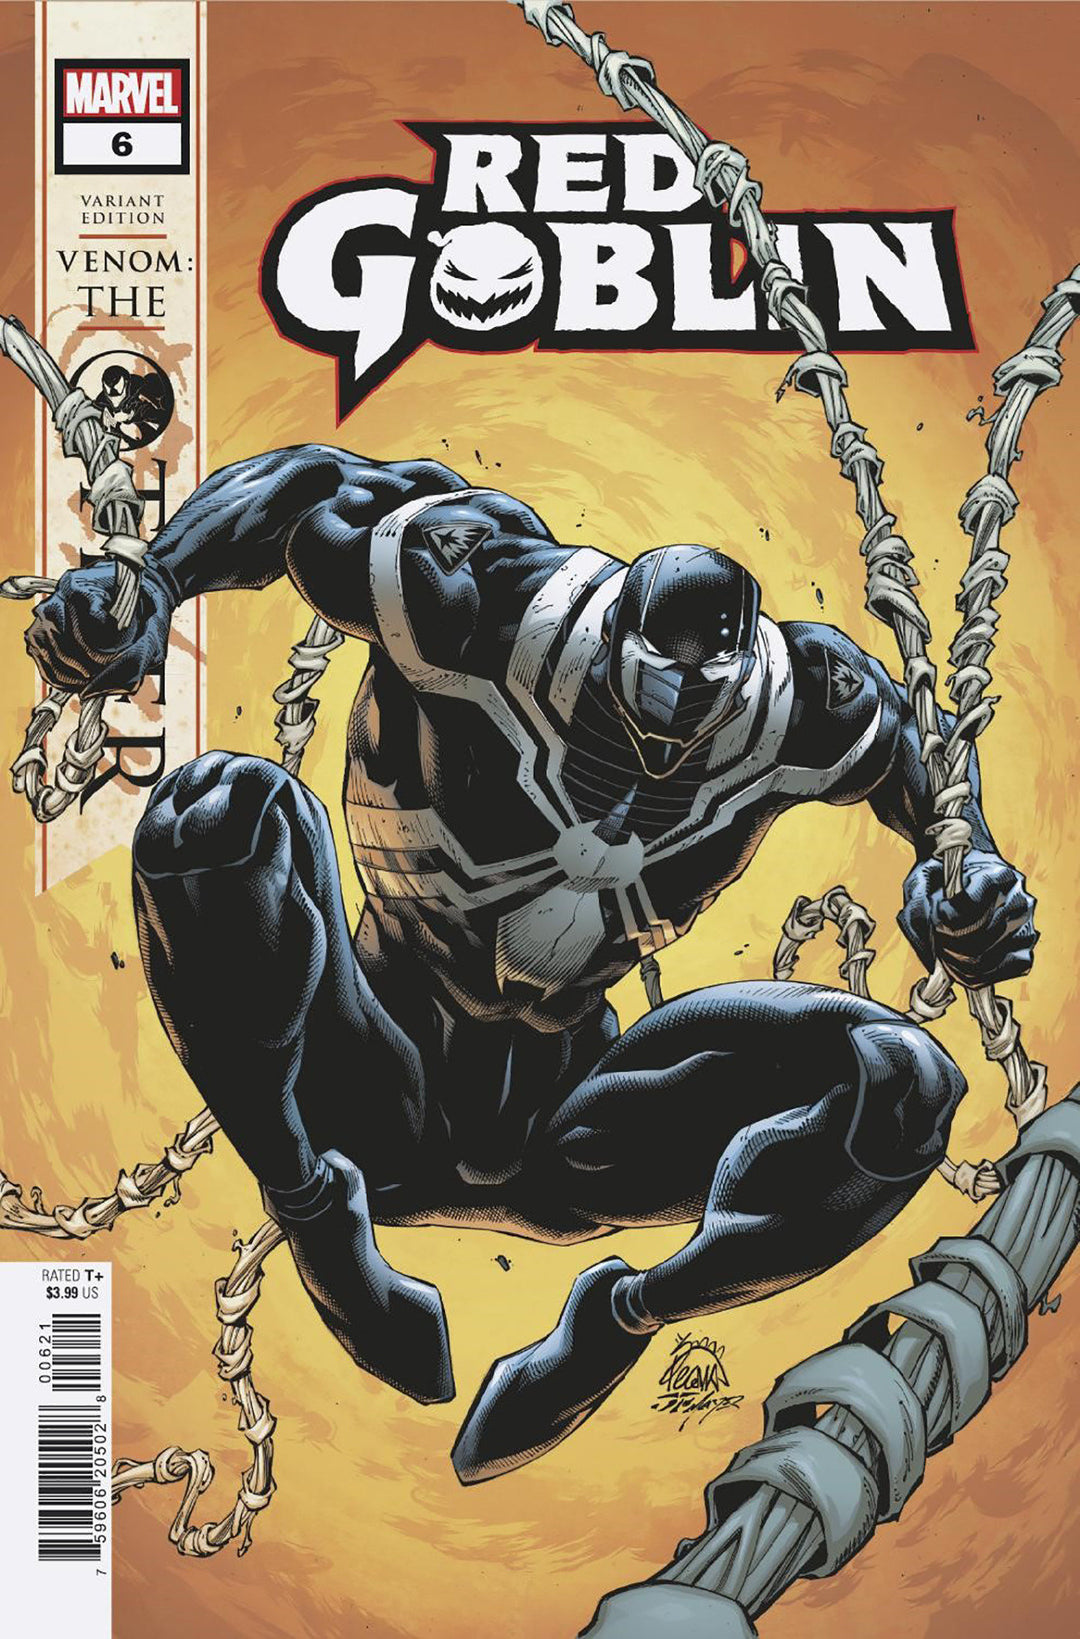 Red Goblin #6 Ryan Stegman Venom The Other Variant